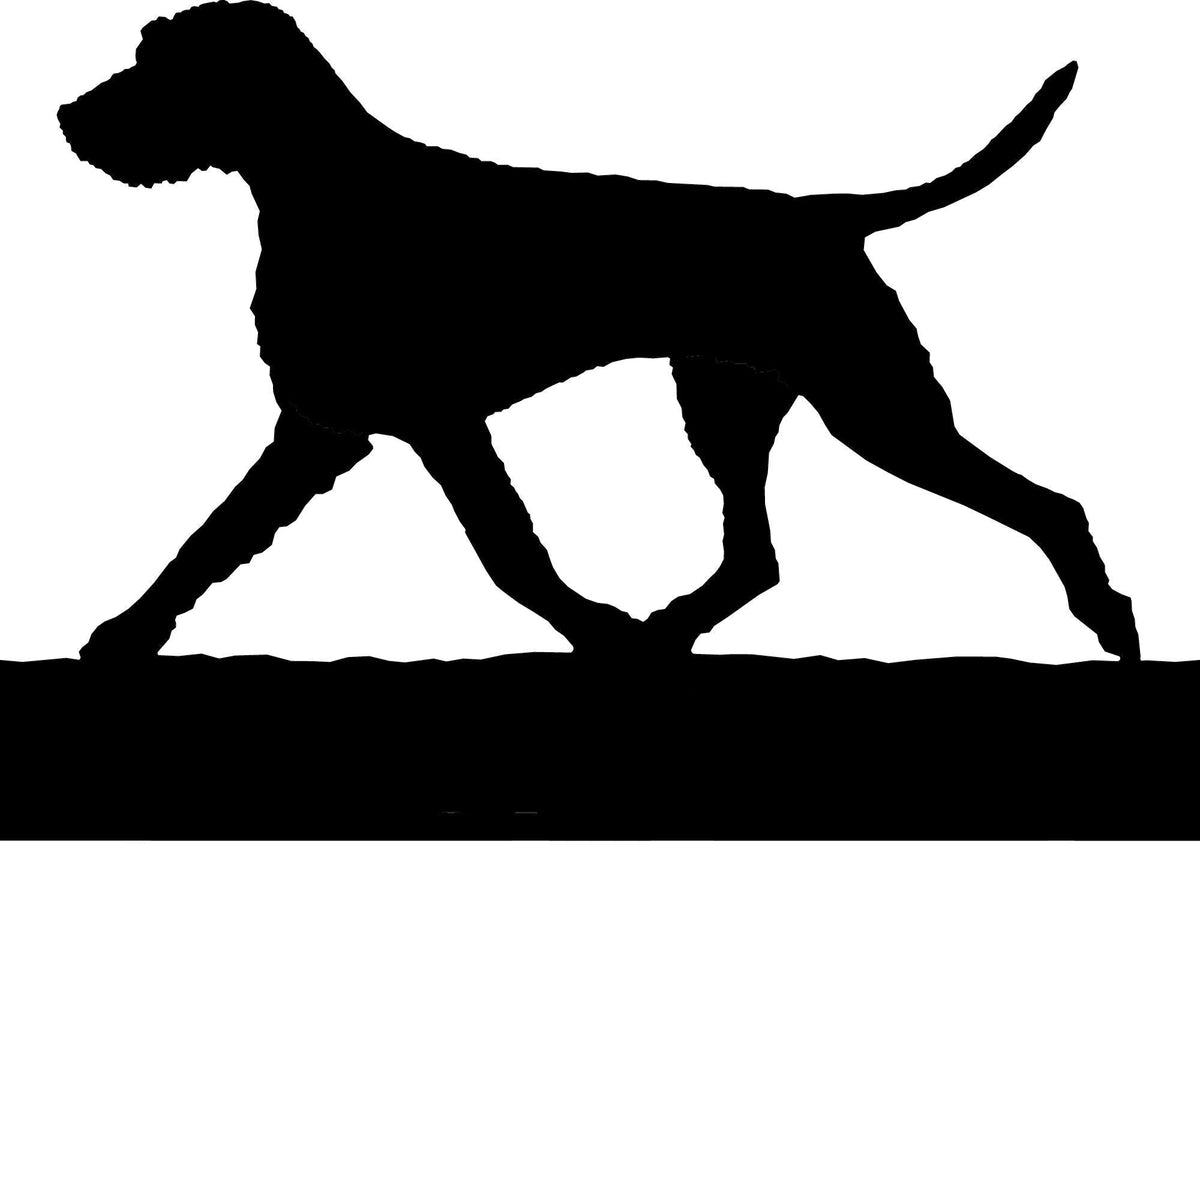 Vizsla (Wirehaired) dog address stake